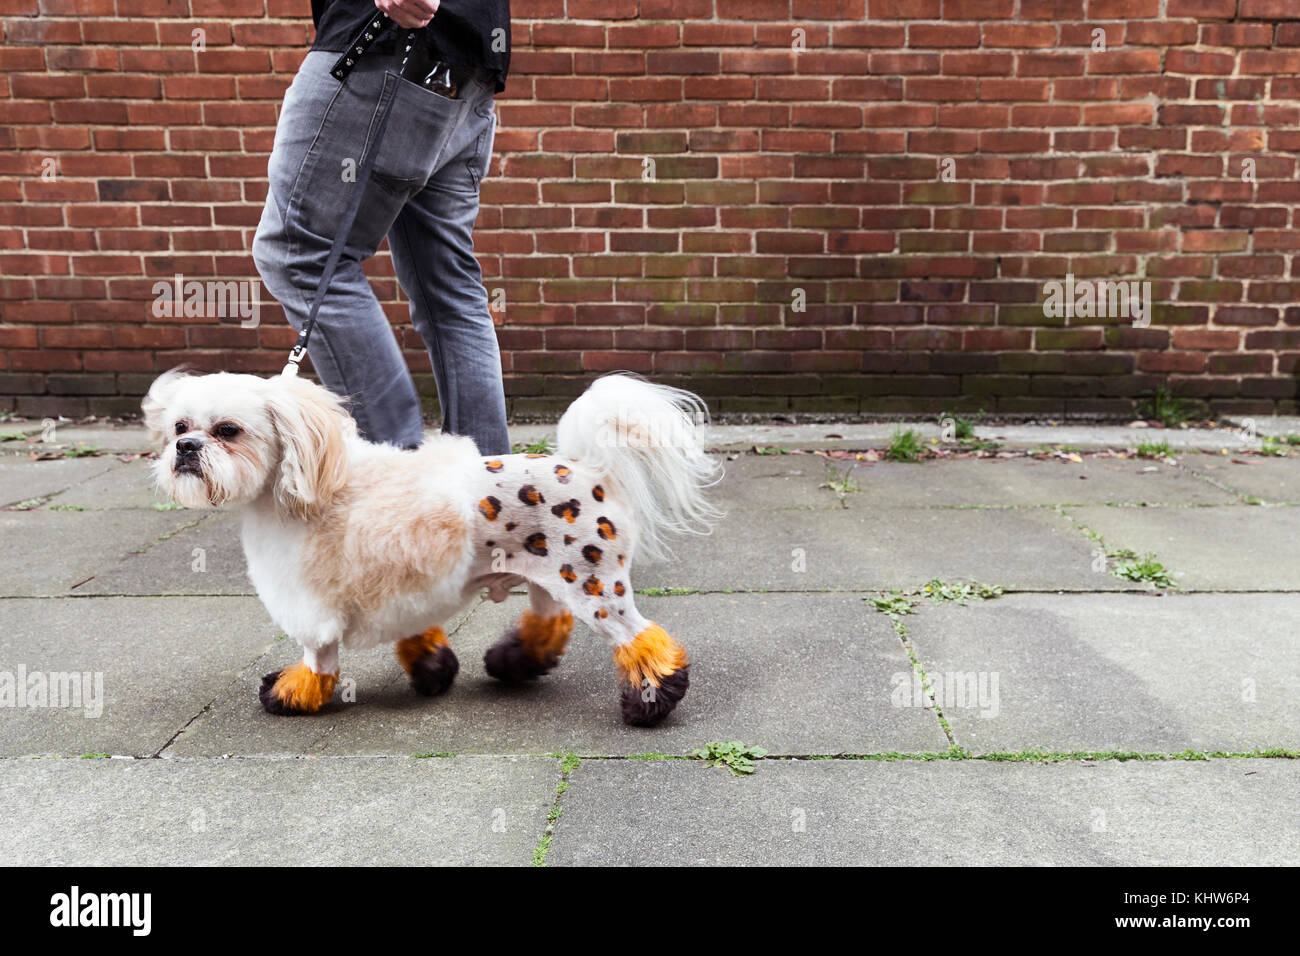 Man Walking gepflegten Hund mit gefärbtem Fell rasiert Stockfoto